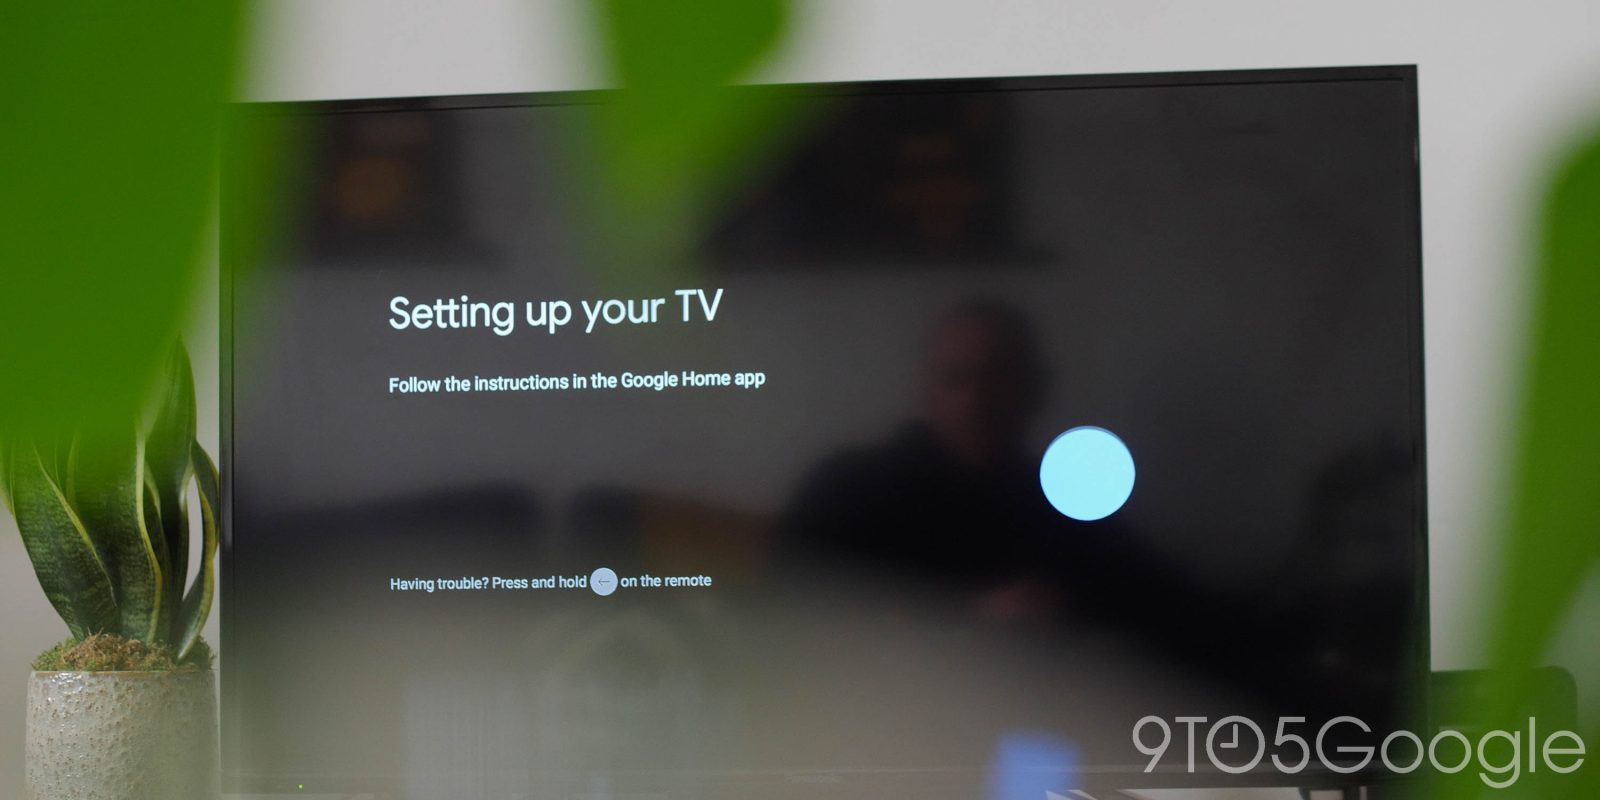 How to install Xbox game pass on new Google Chromecast Google TV 